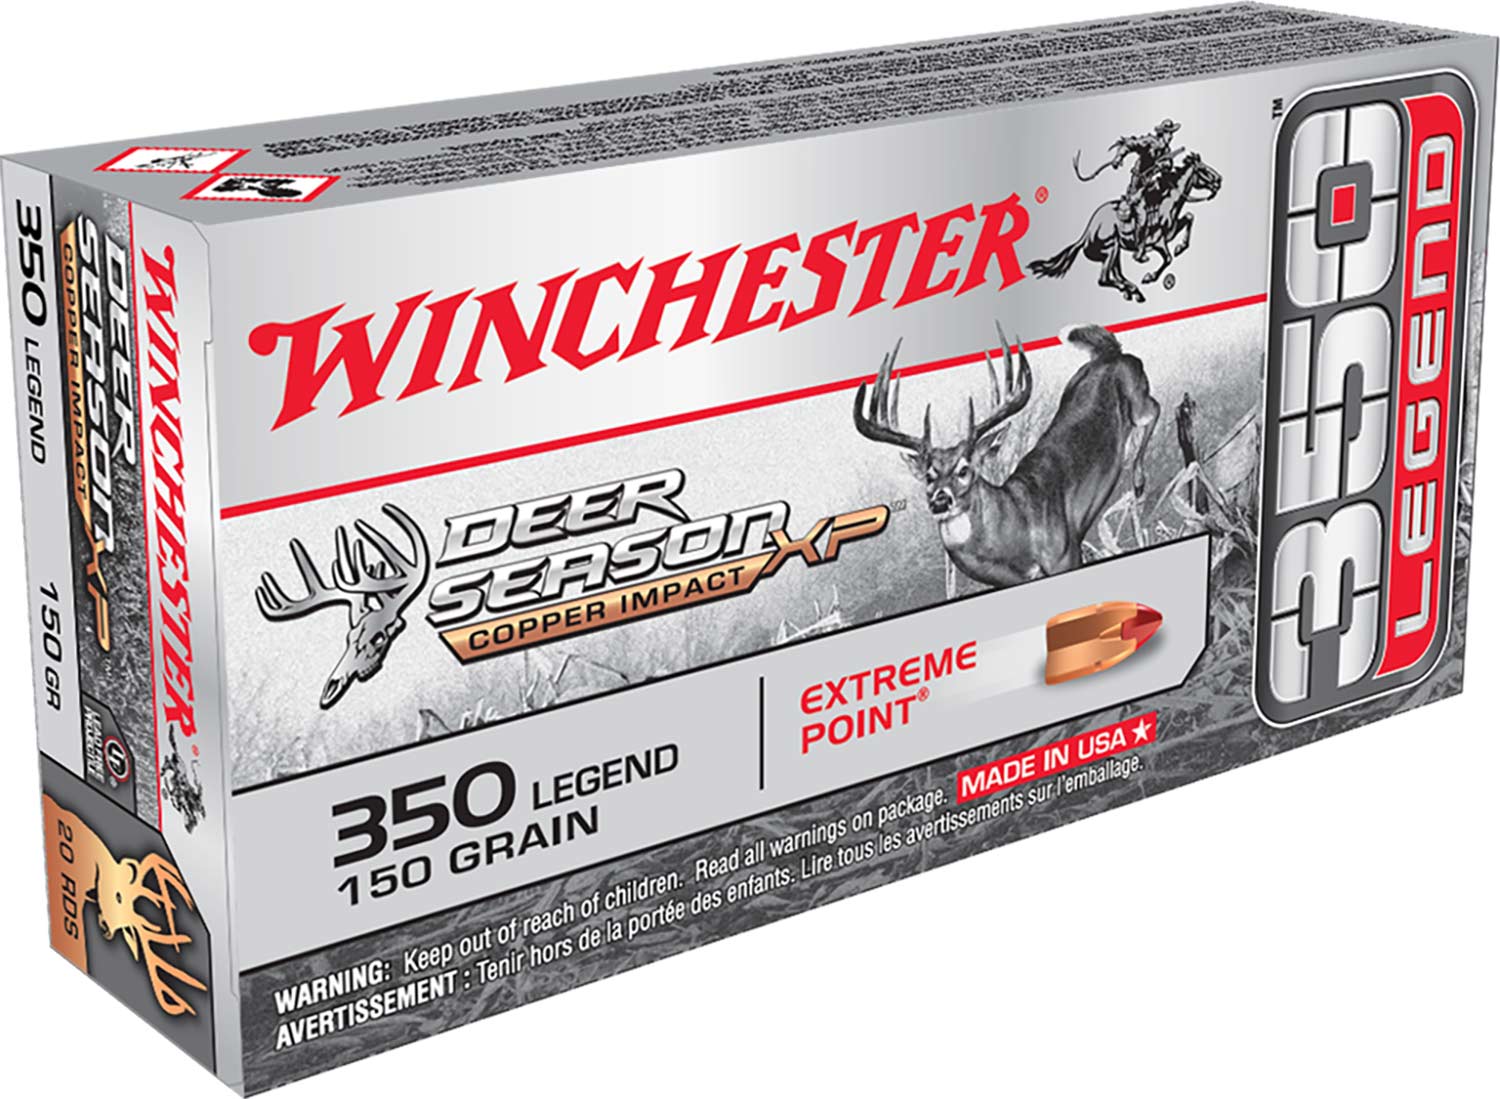 Winchester Deer Season XP Copper Impact 350 Legend